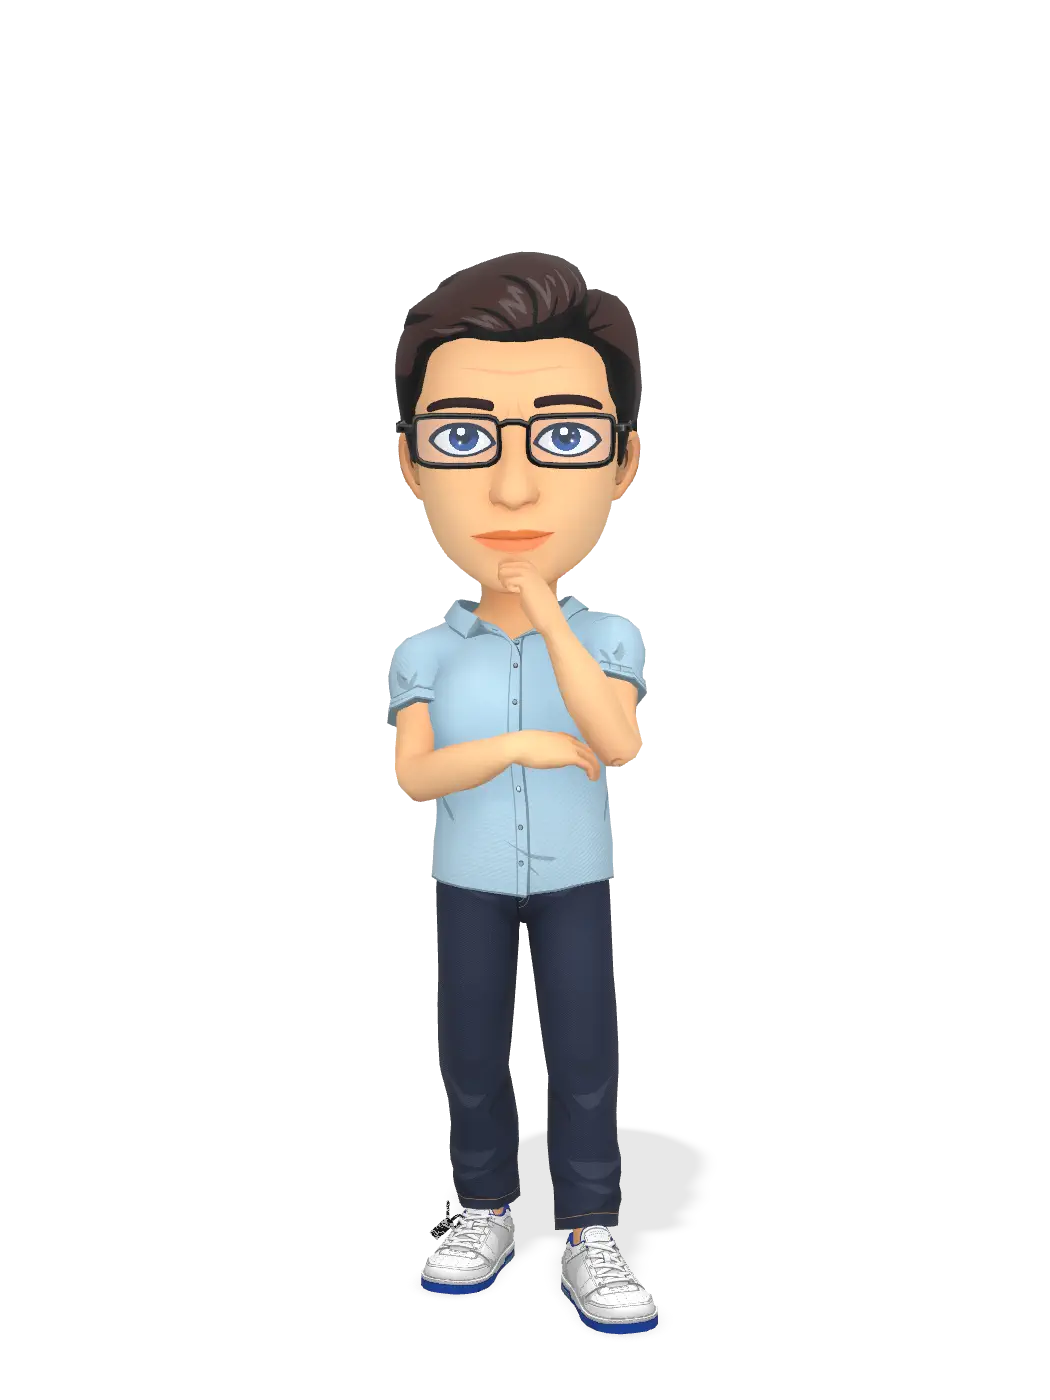 3D Bitmoji for mattc.75 avatar